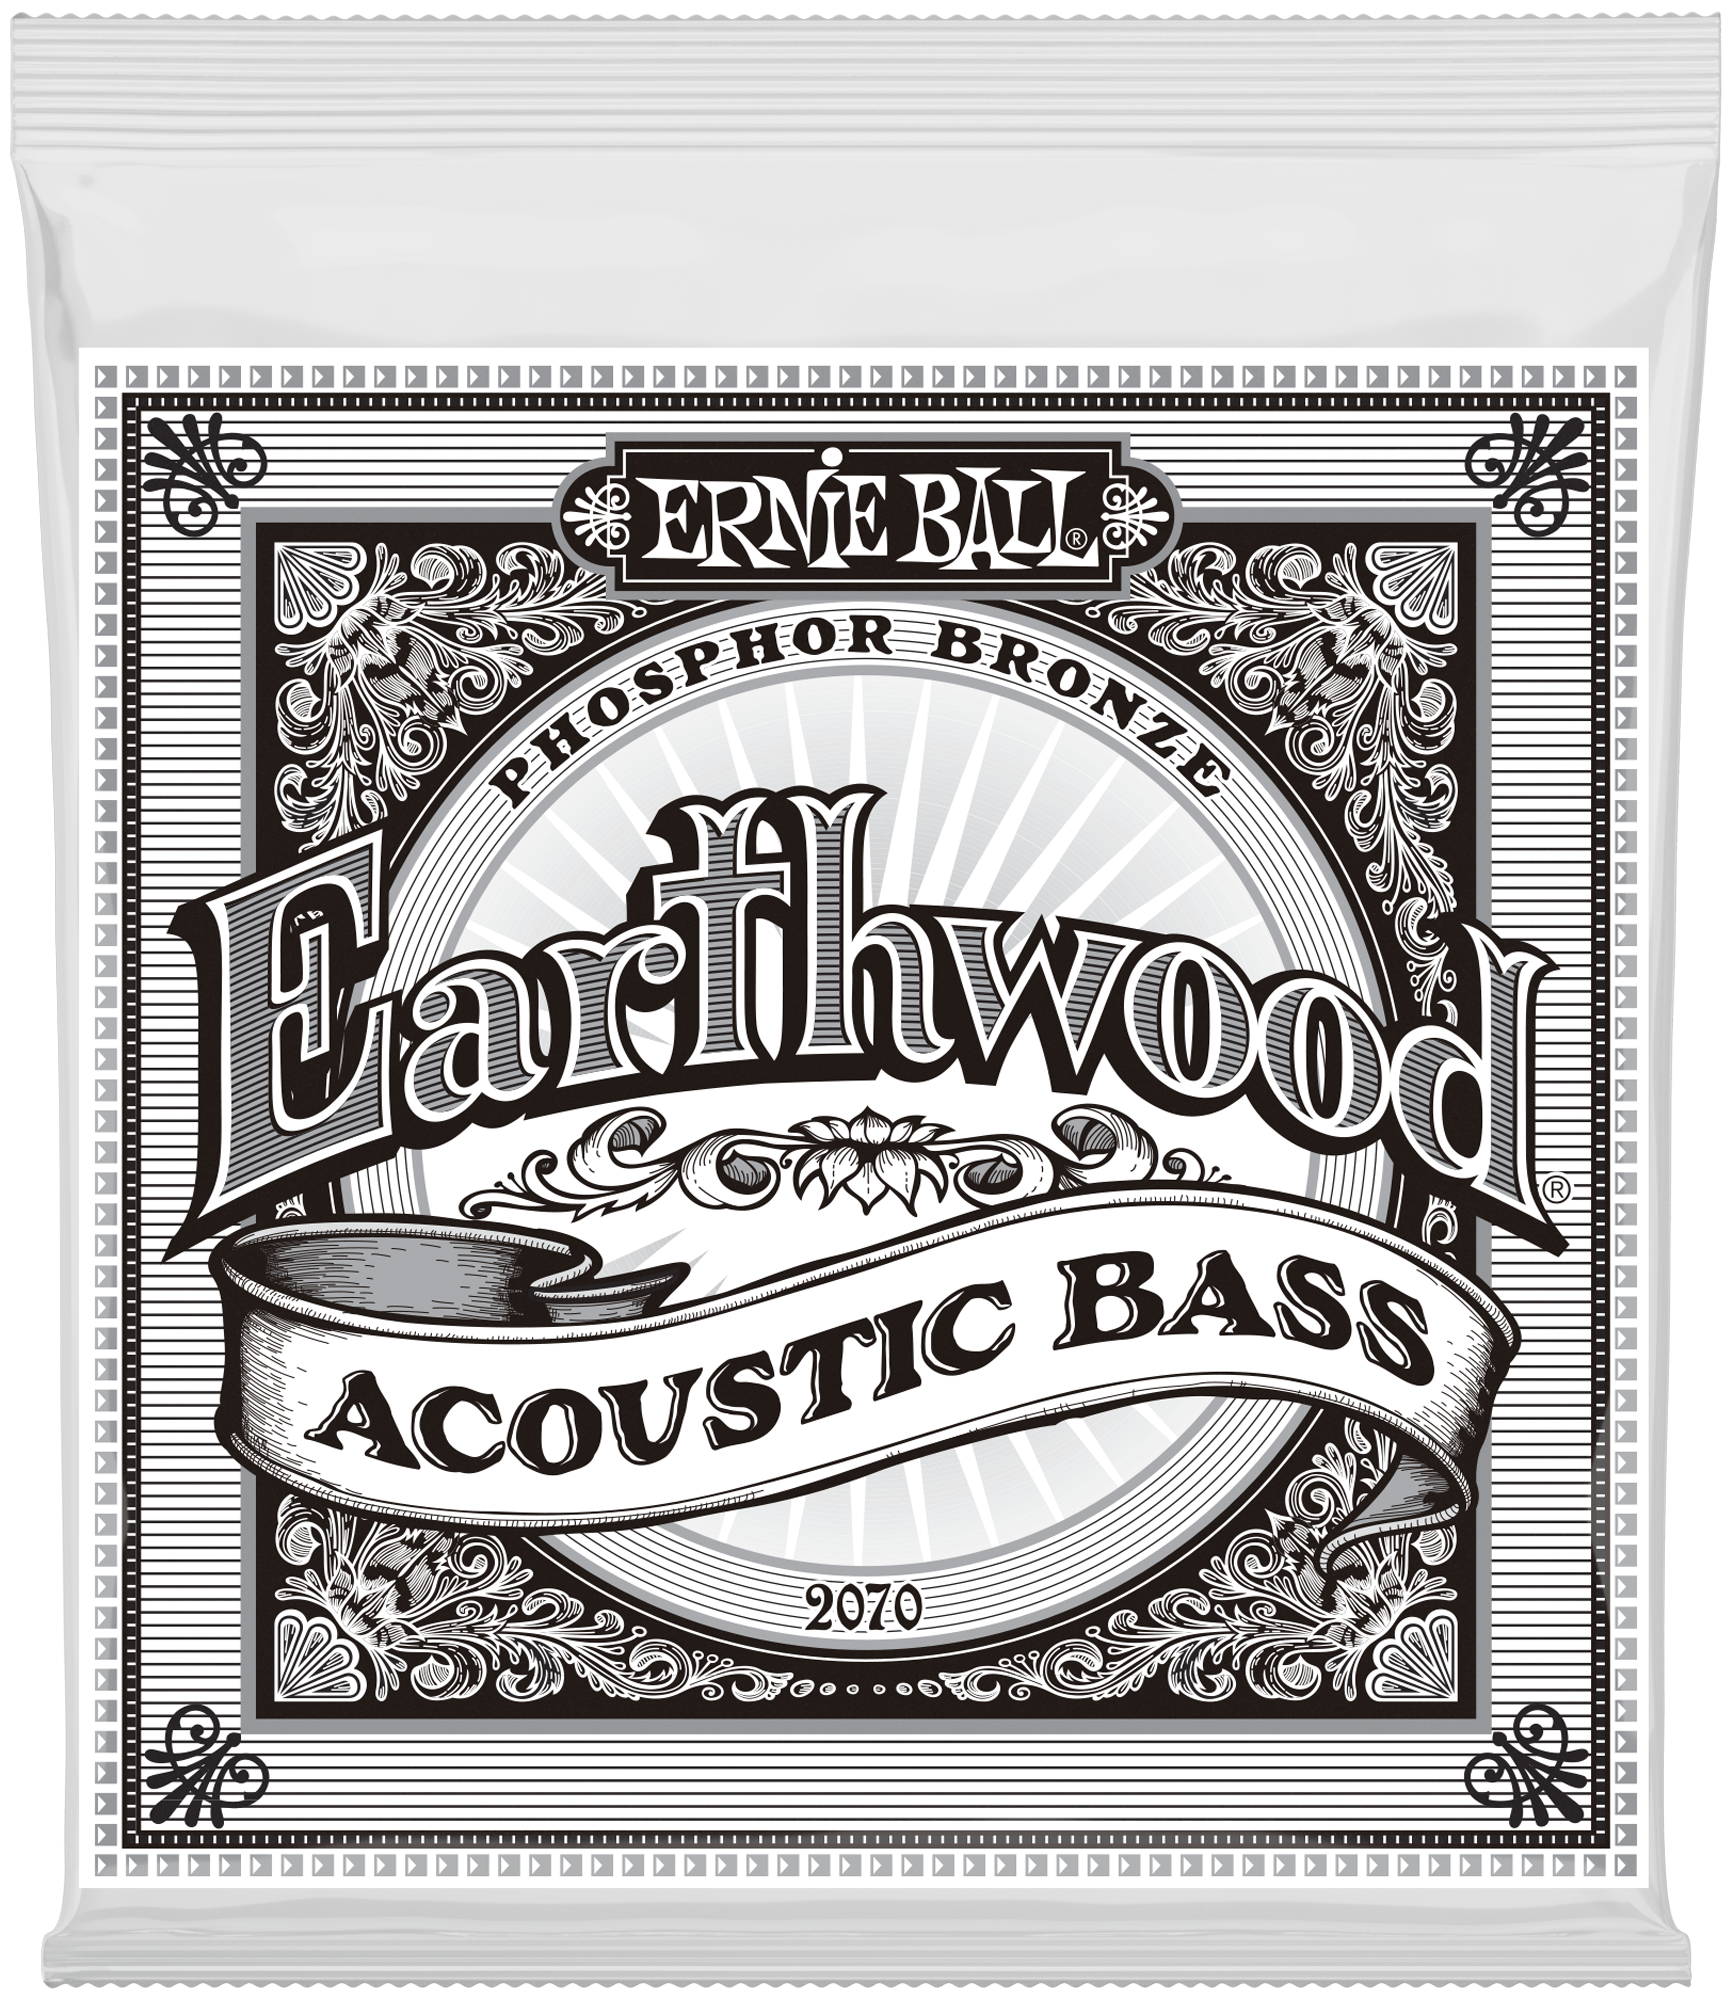 Earthwood Acoustic Basssaiten Phosphor bronze 045-095